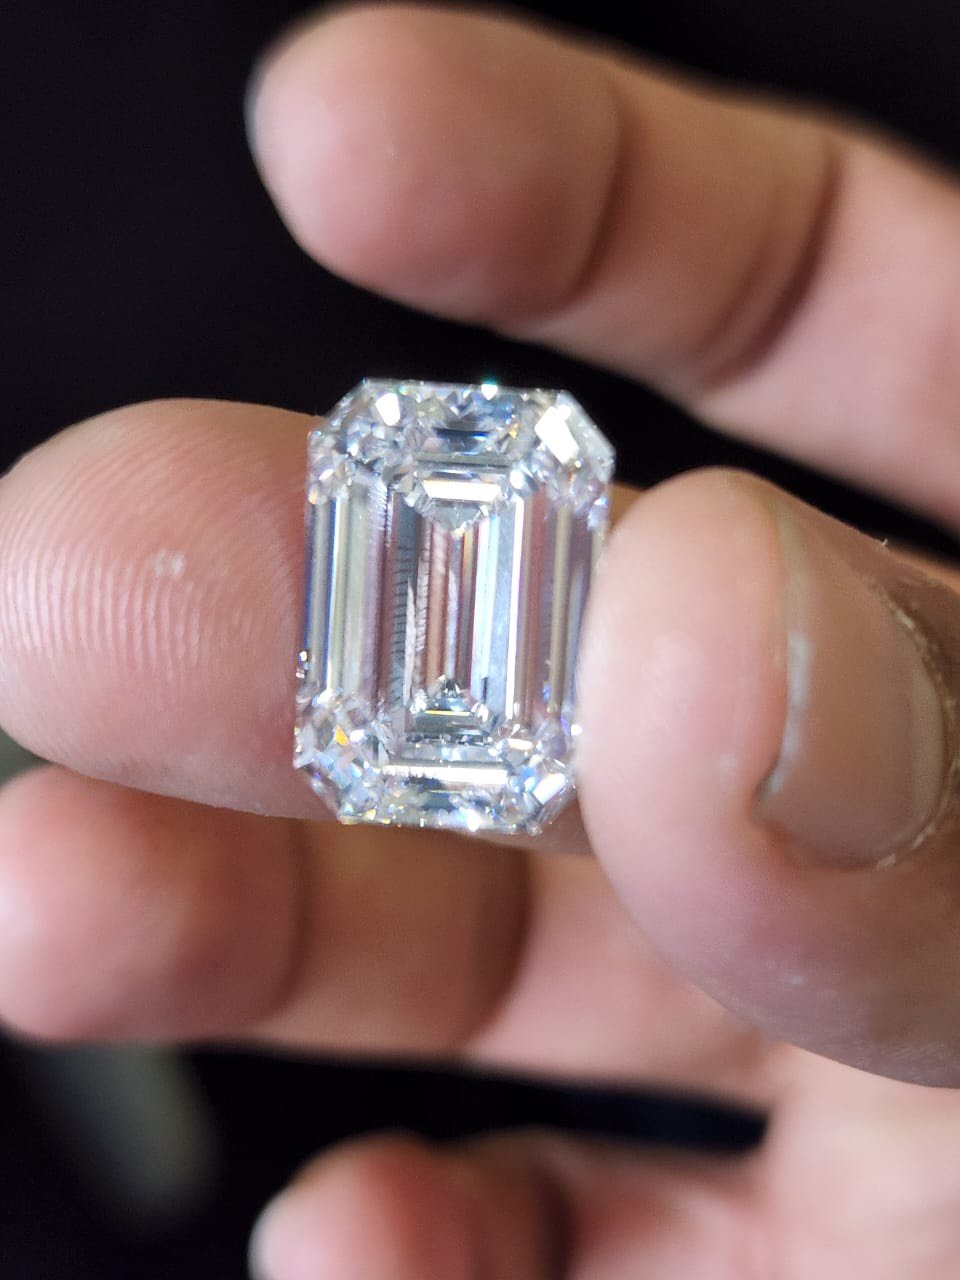 2211733588- 15.73 ct emerald GIA certified Loose diamond, D color | VVS1 clarity